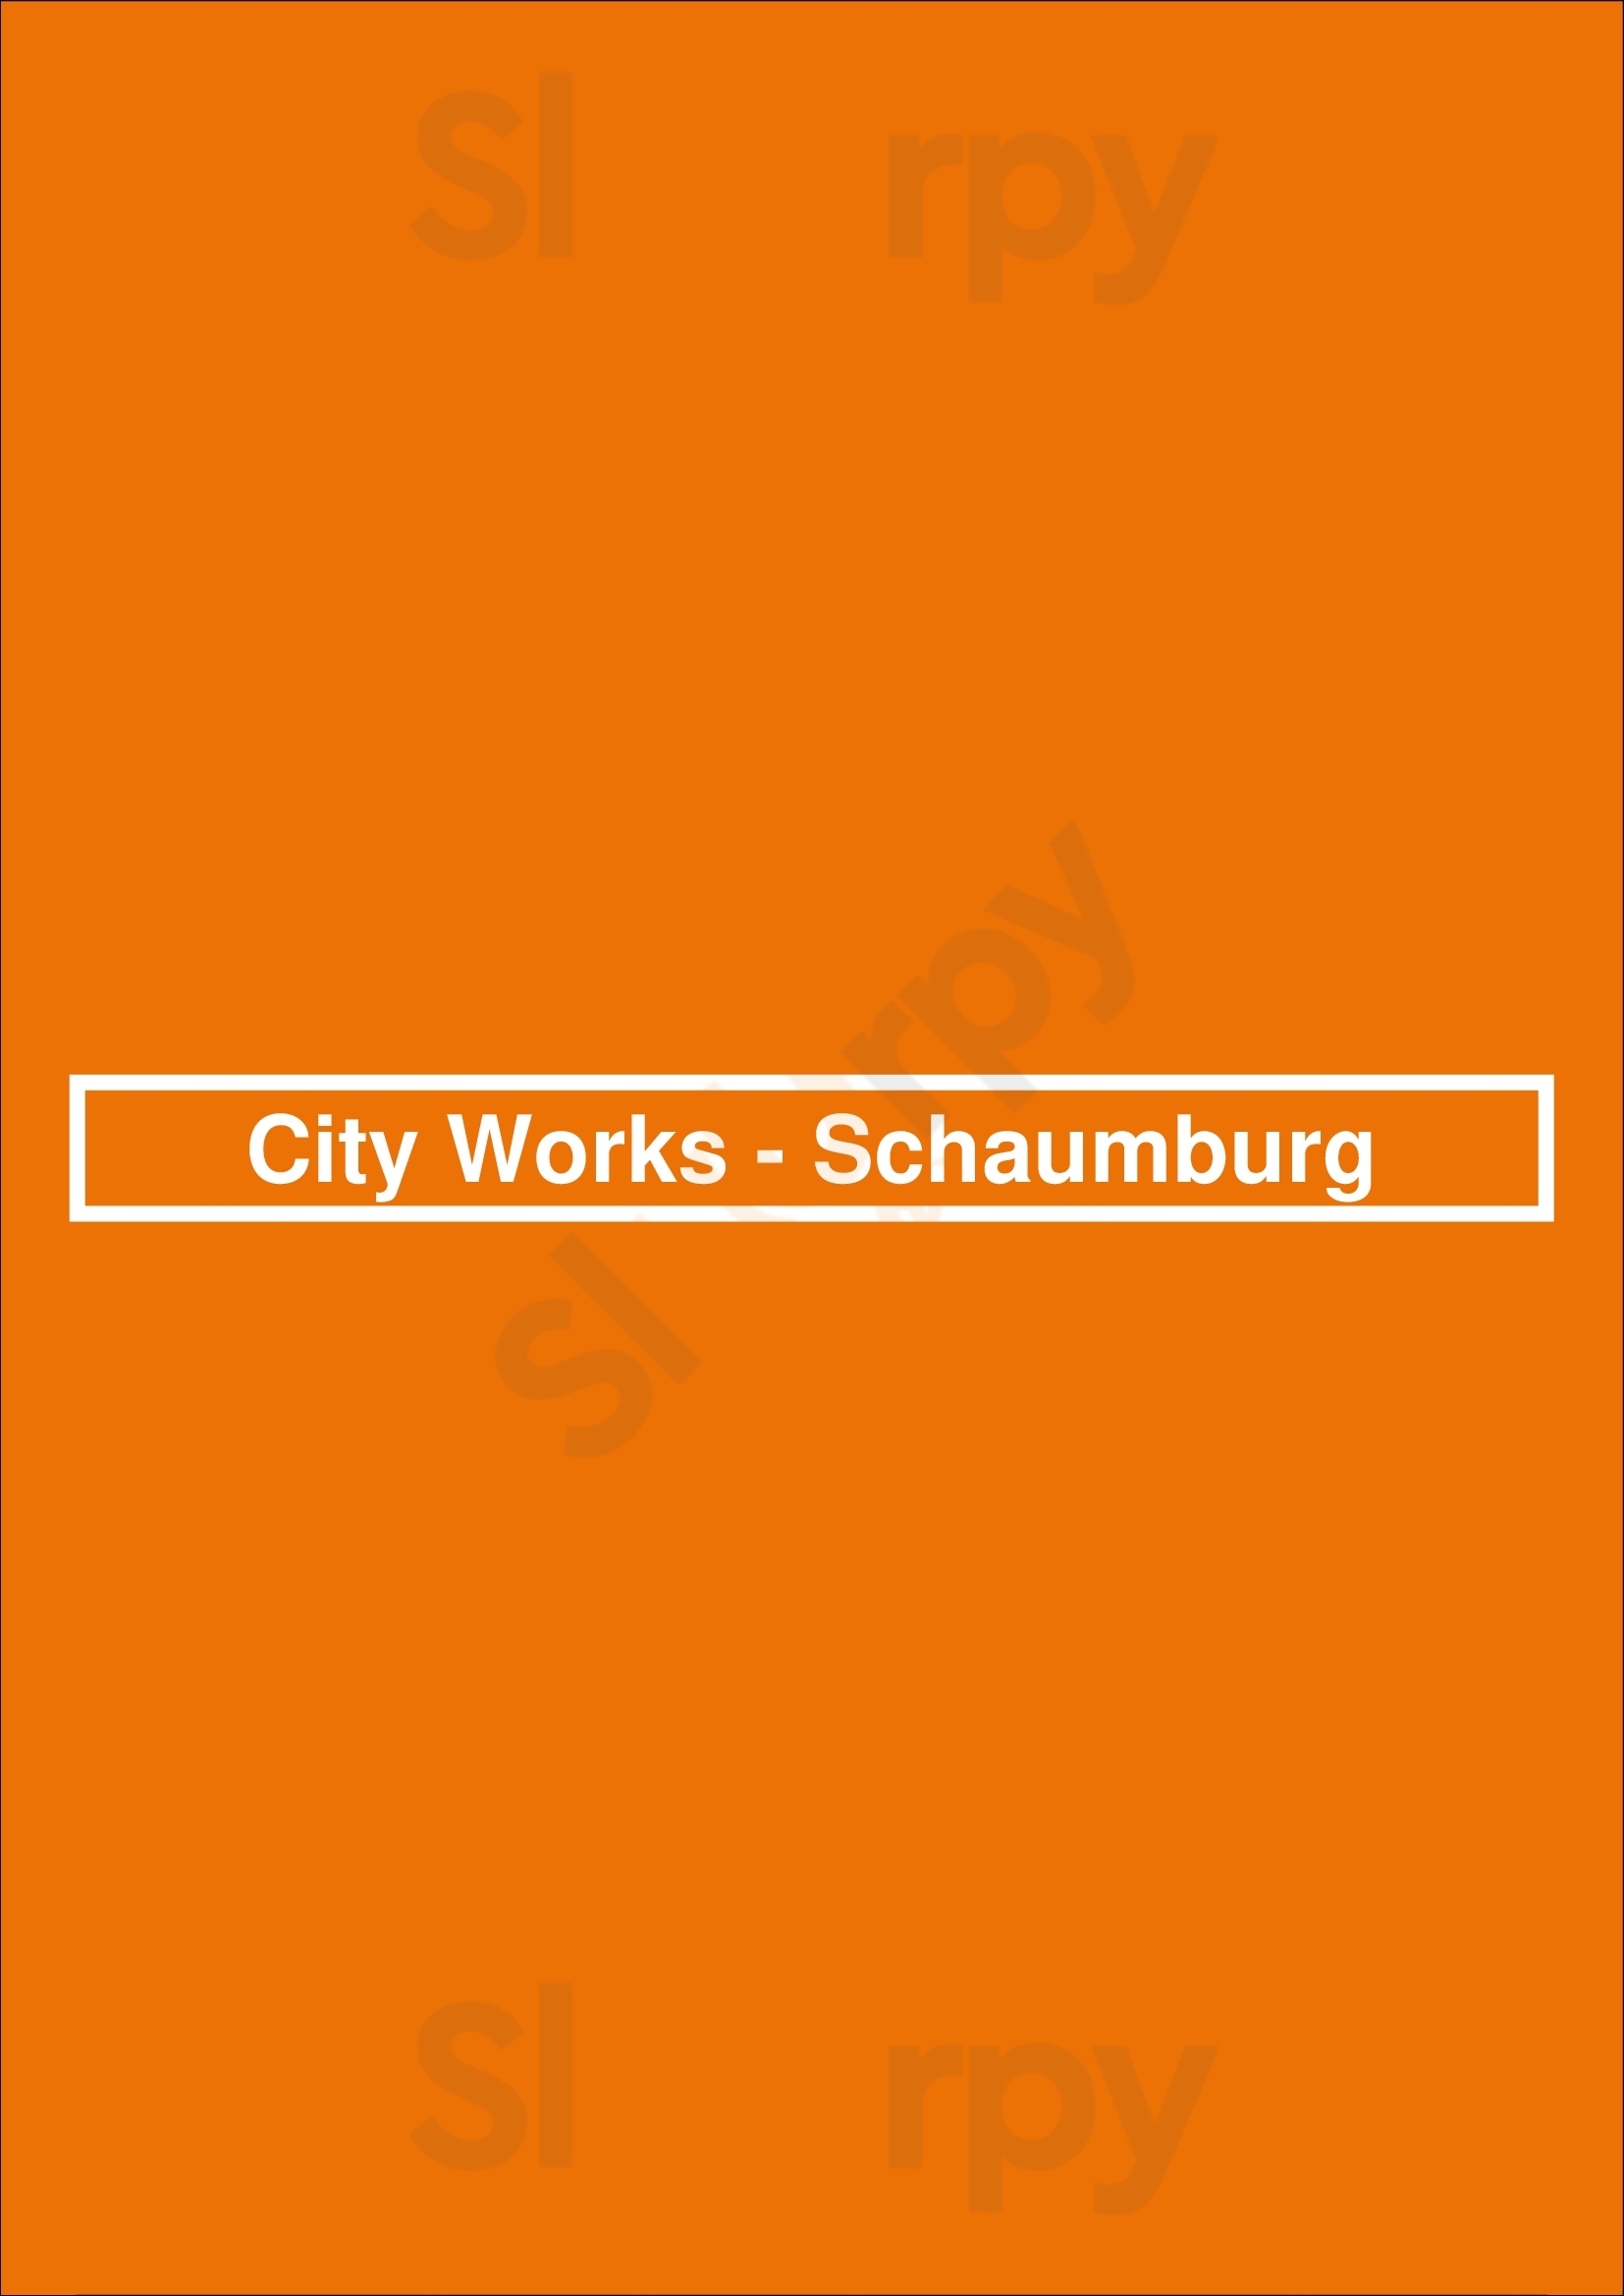 City Works (woodfield Mall - Schaumburg) Schaumburg Menu - 1